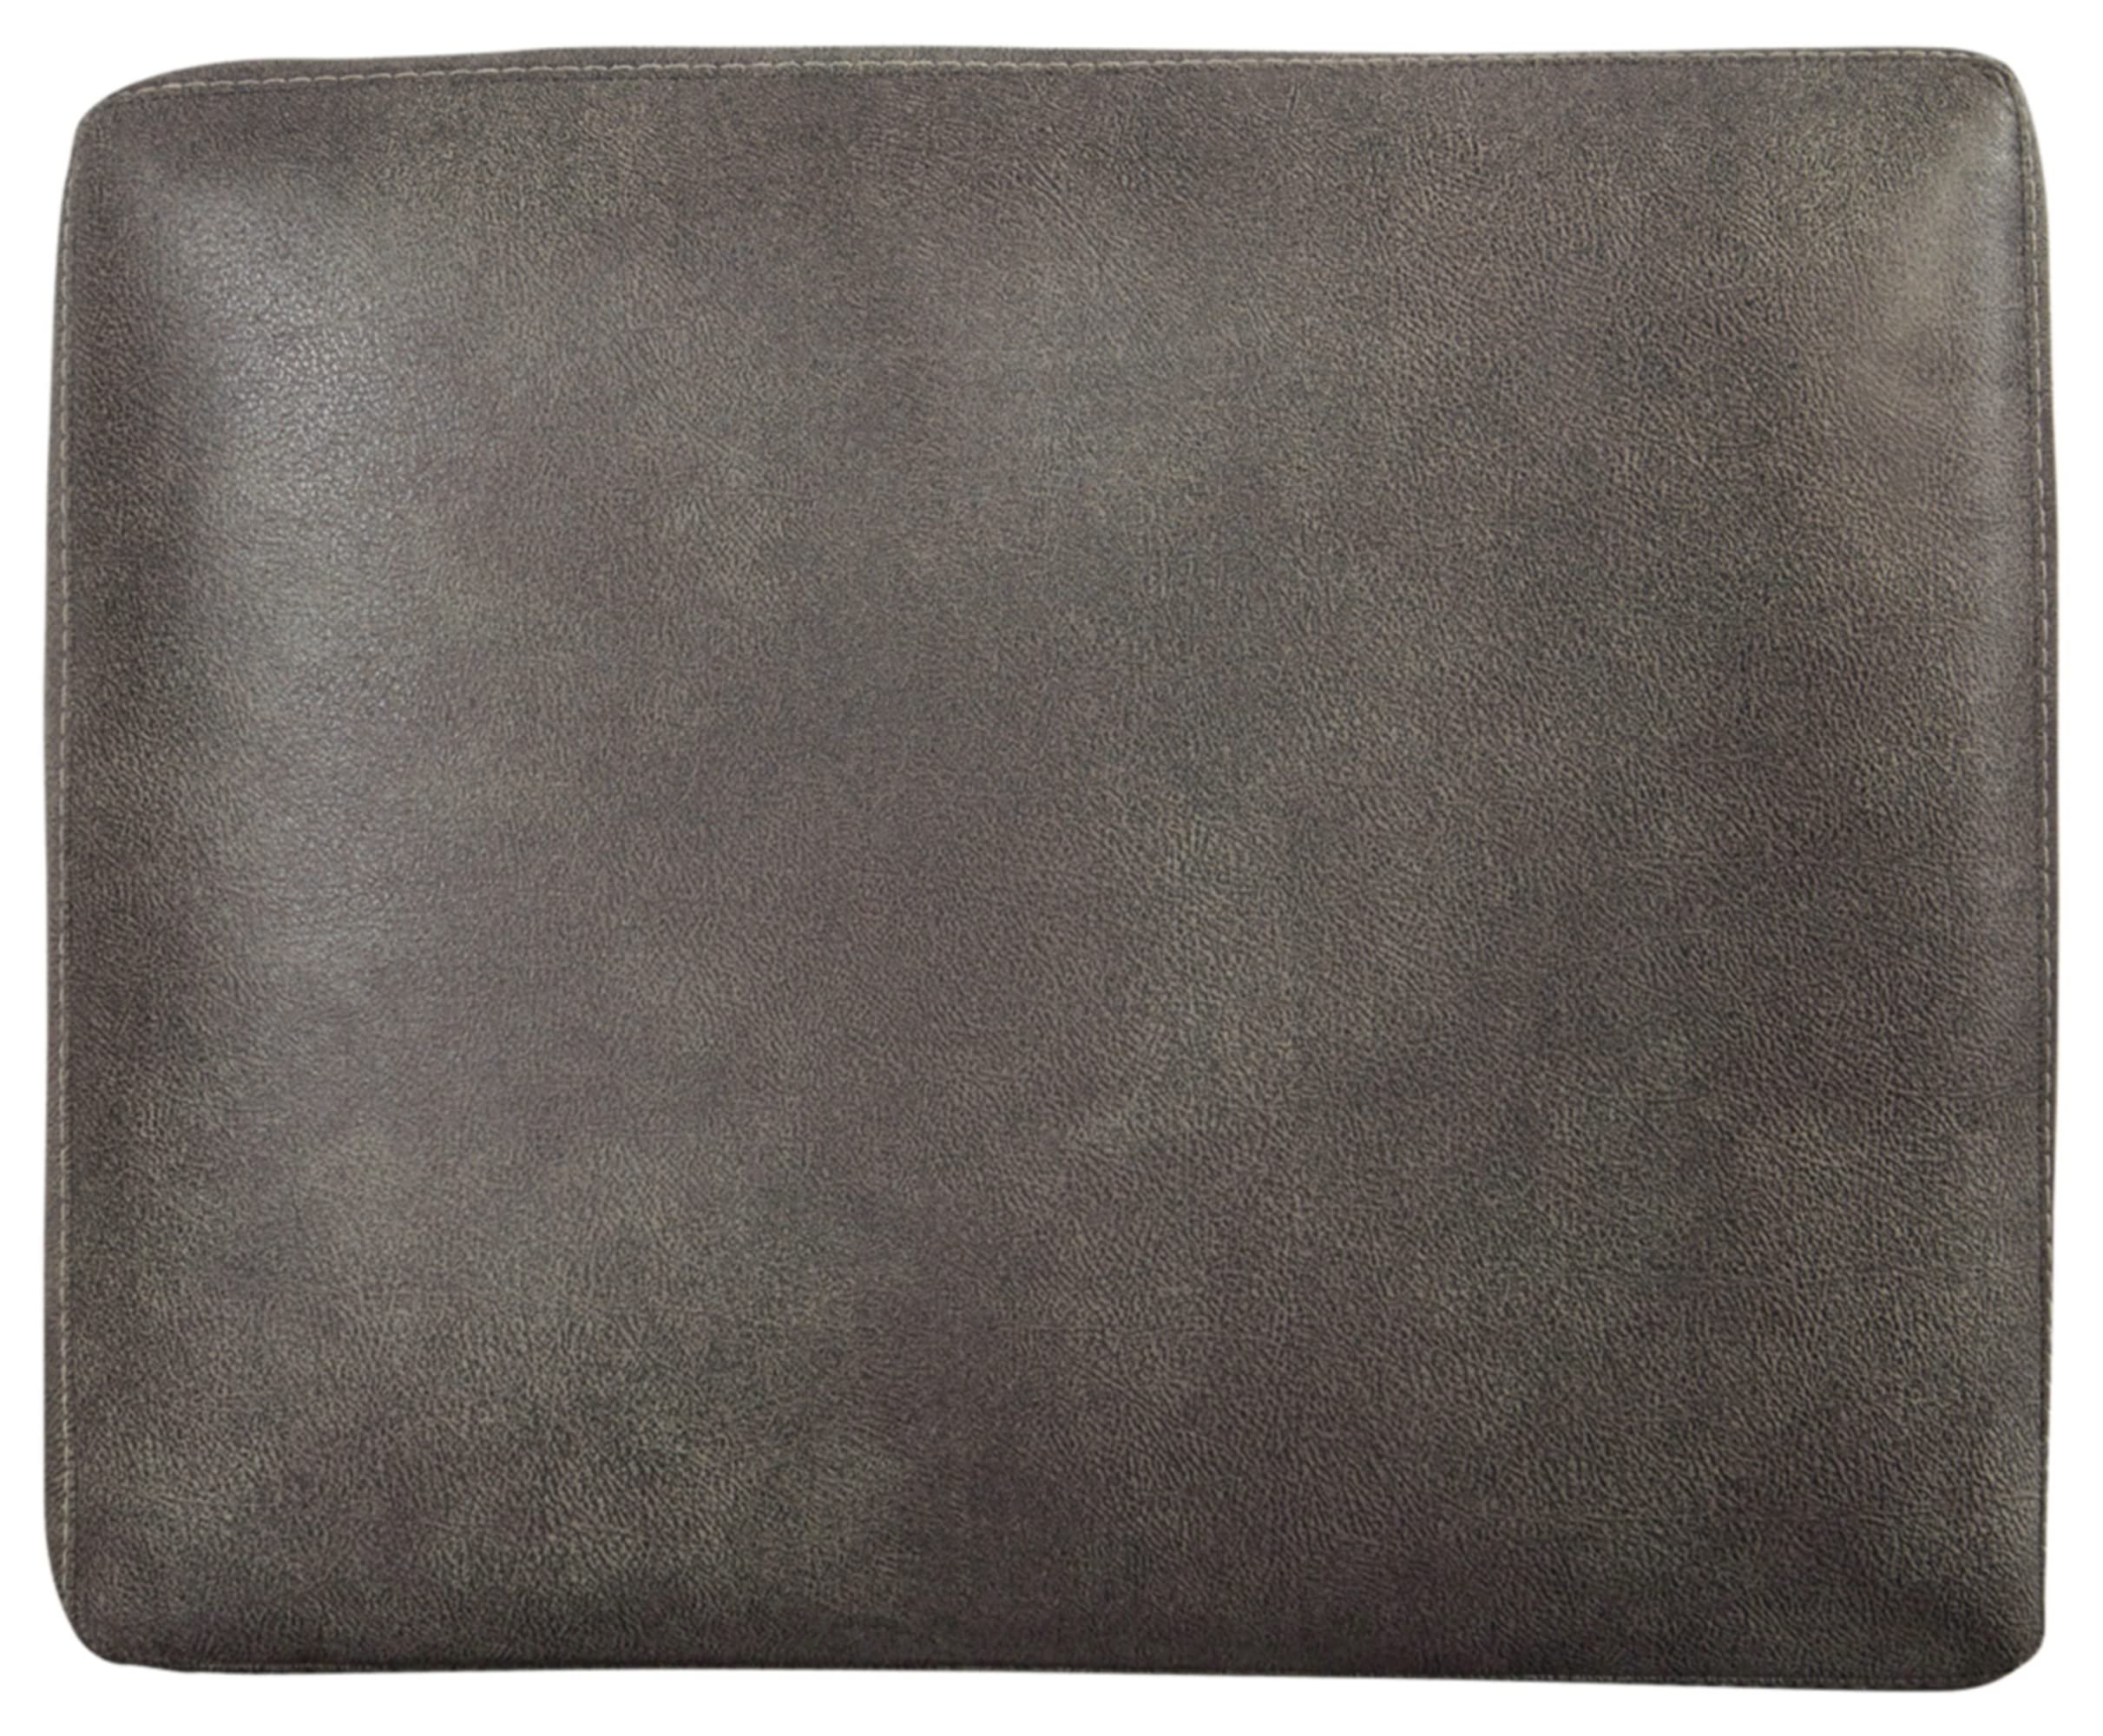 Signature Design by Ashley Arroyo Mid Century Modern Faux Leather Ottoman, Dark Gray